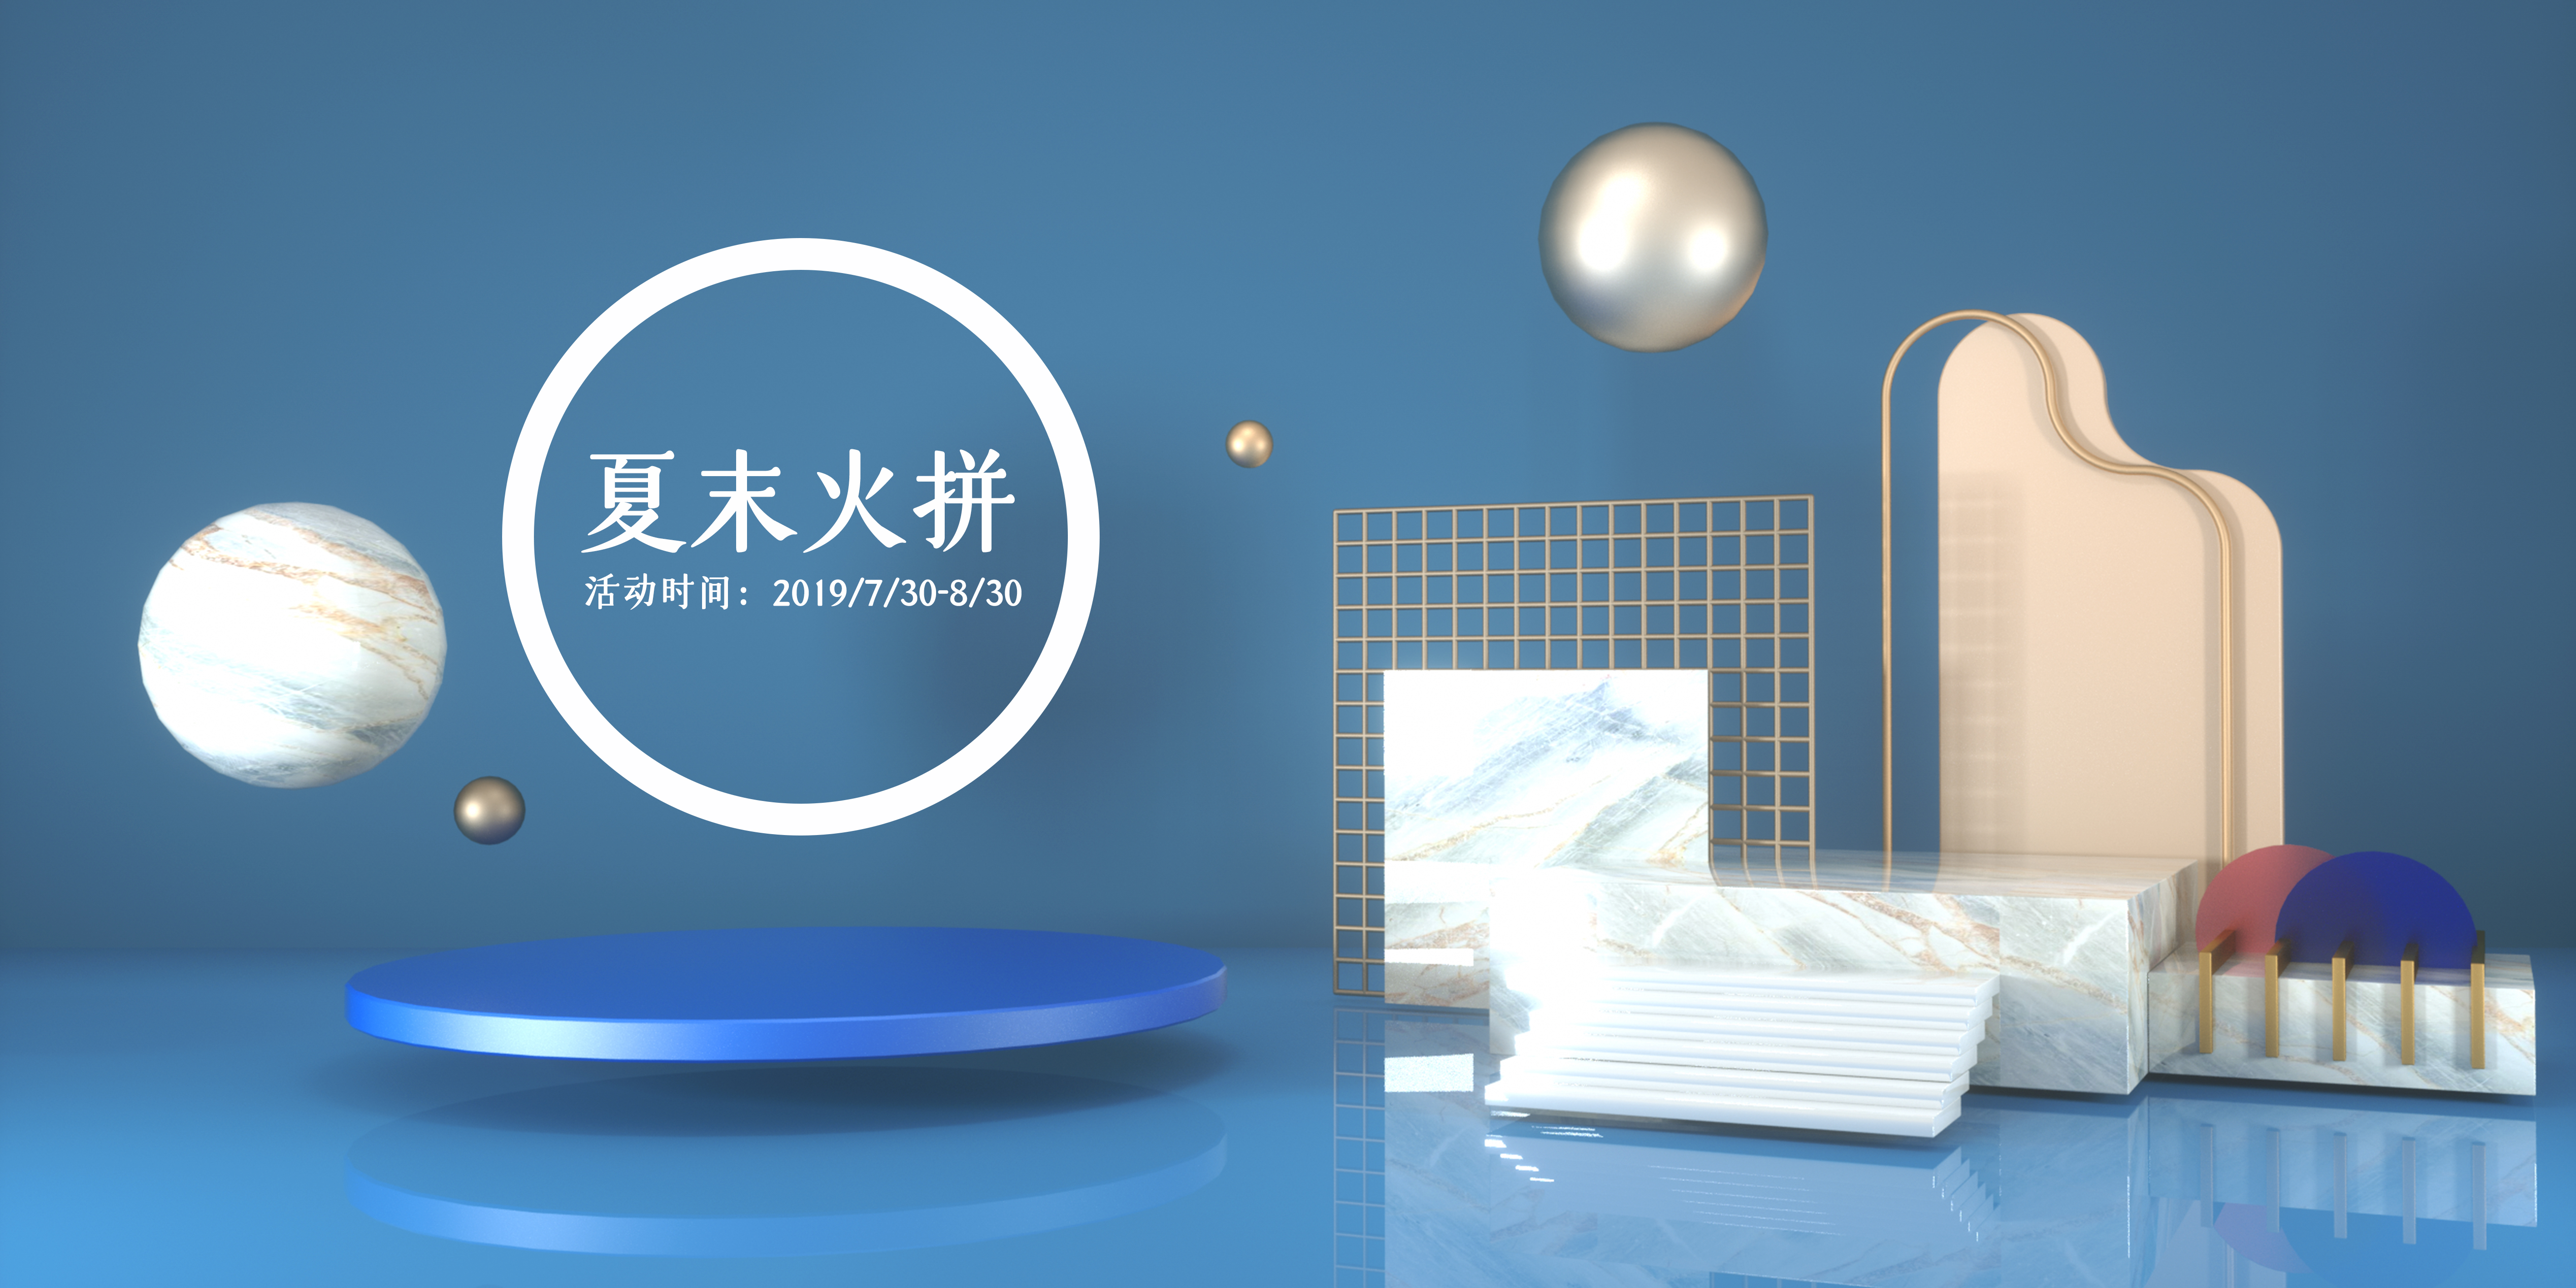 C4D模型电商促销夏末清新蓝色展台036.jpg